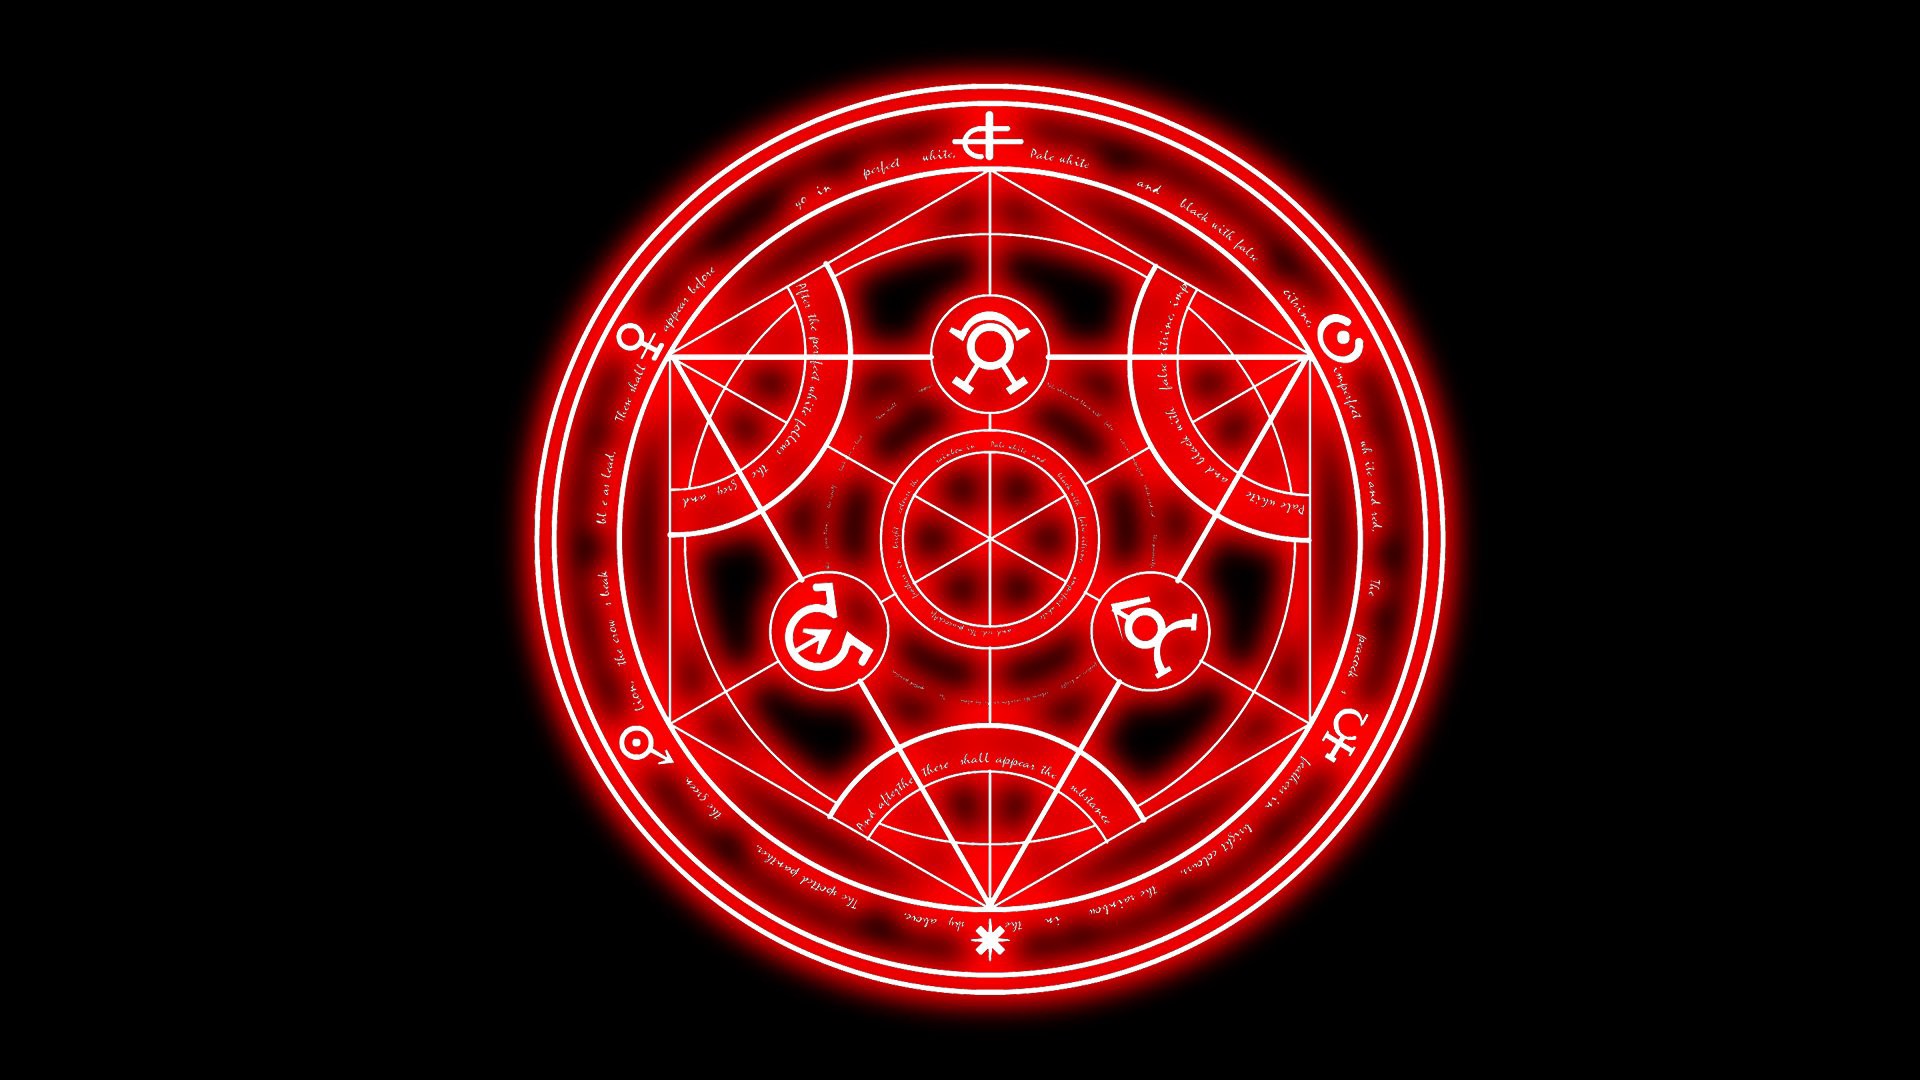 Fullmetal Alchemist Symbols, Explained